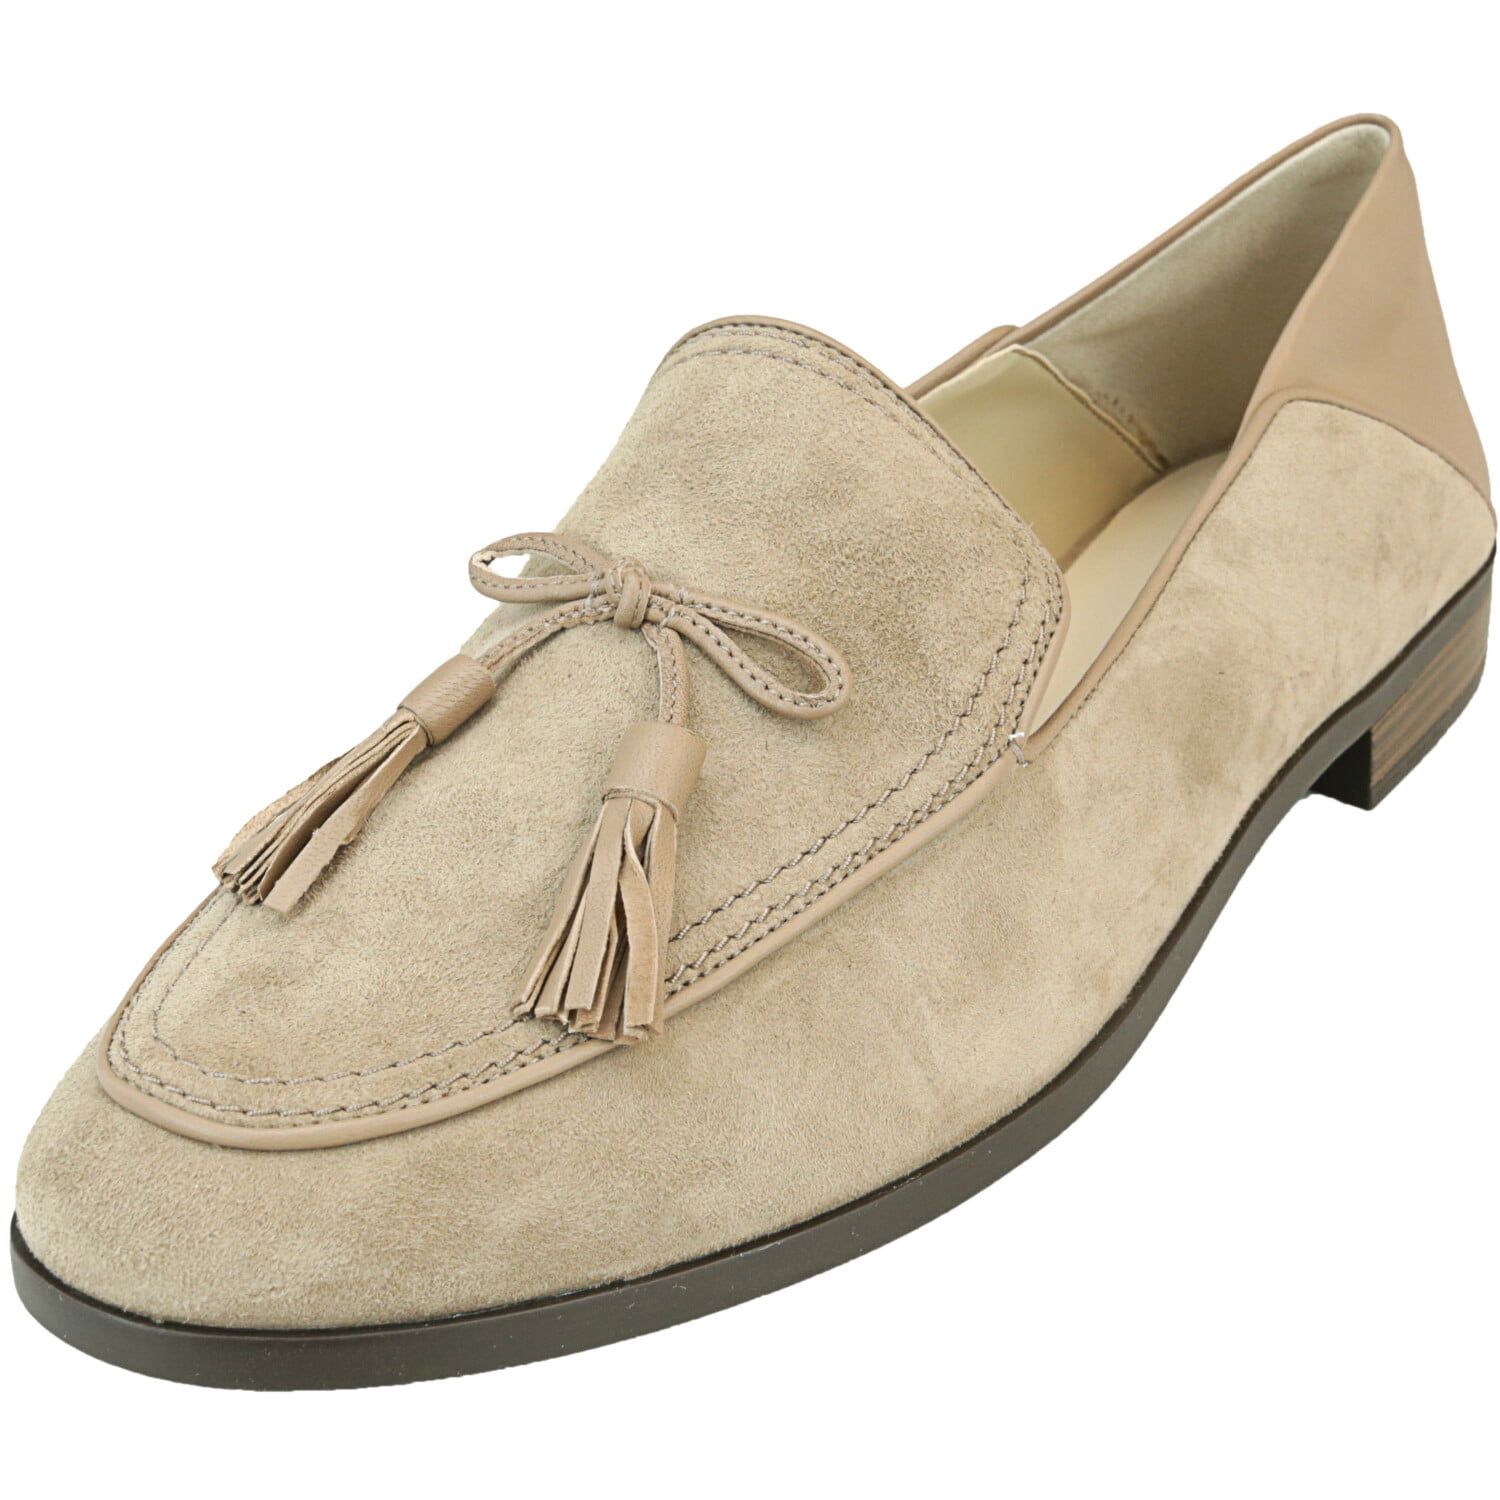 7.5 D M US,Beige Moonwalker Women's Leather Slip-on Comfort Tassel Loafers Moccasins